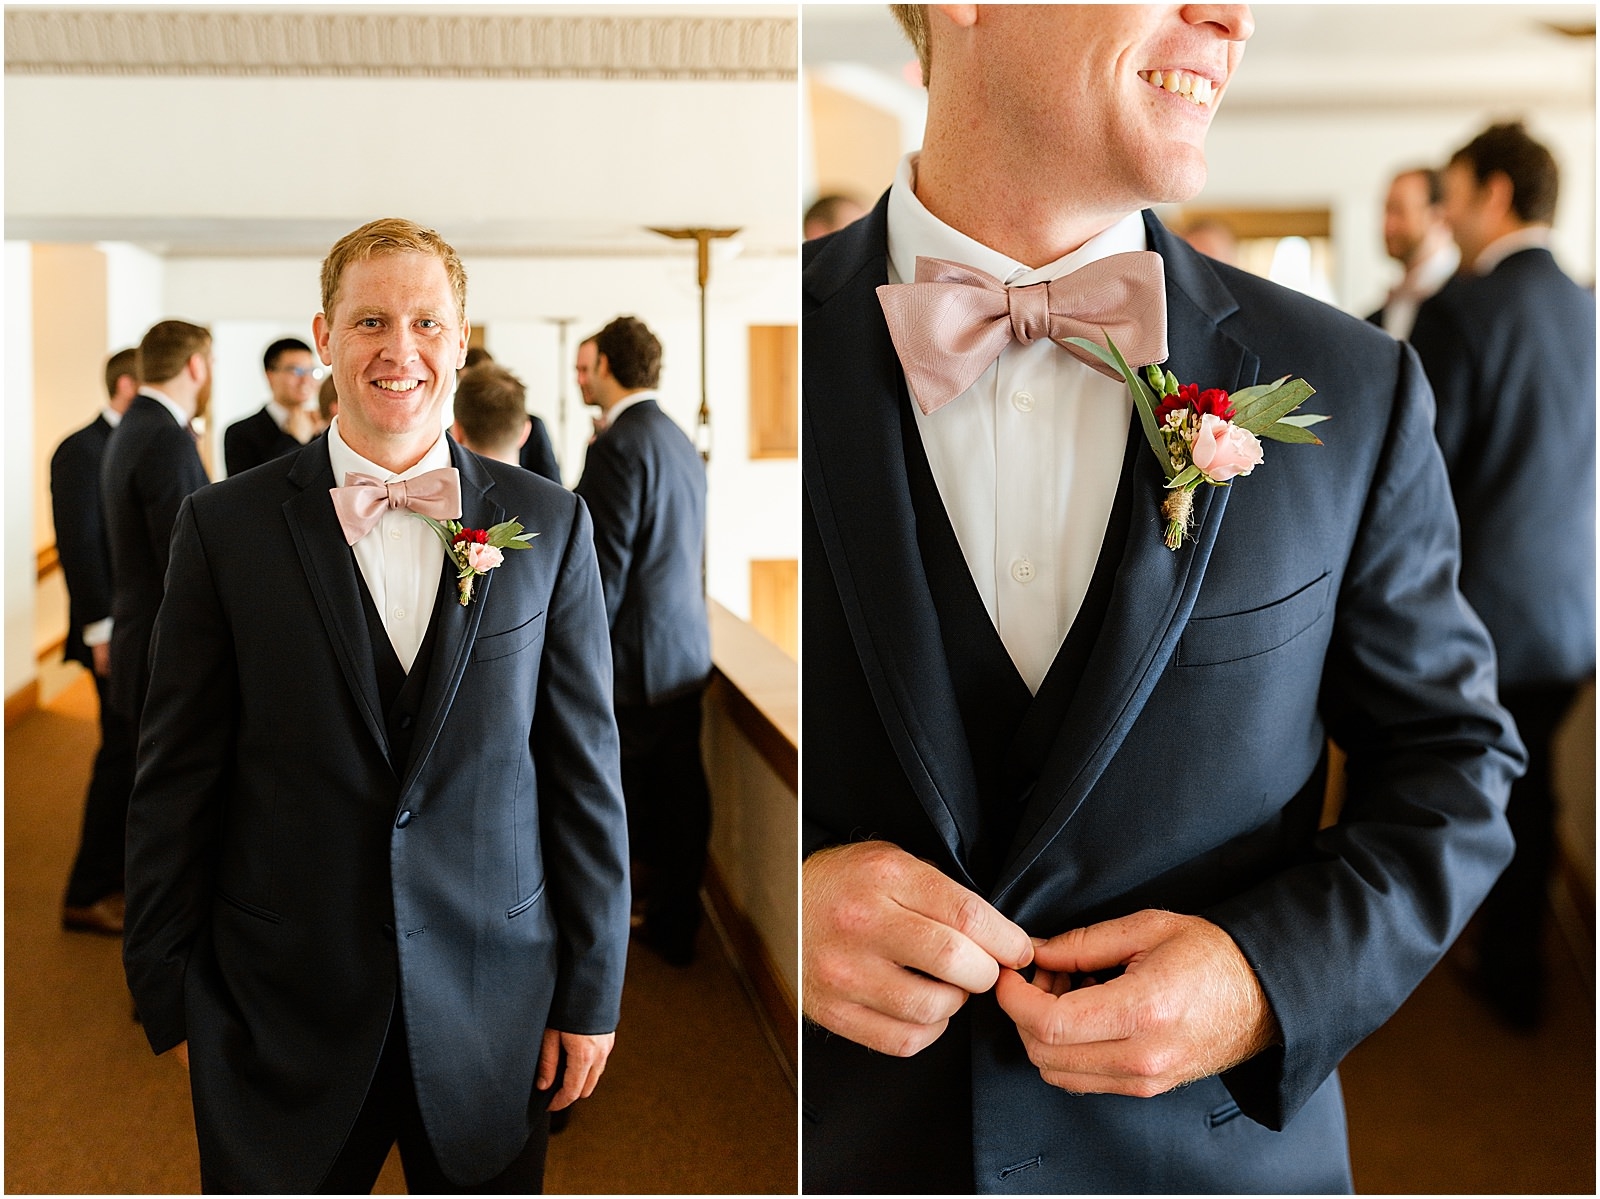 Deidra and Andrew | A Huntingburgh Indiana Wedding Bret and Brandie | Evansville Photographers | @bretandbrandie-0031.jpg